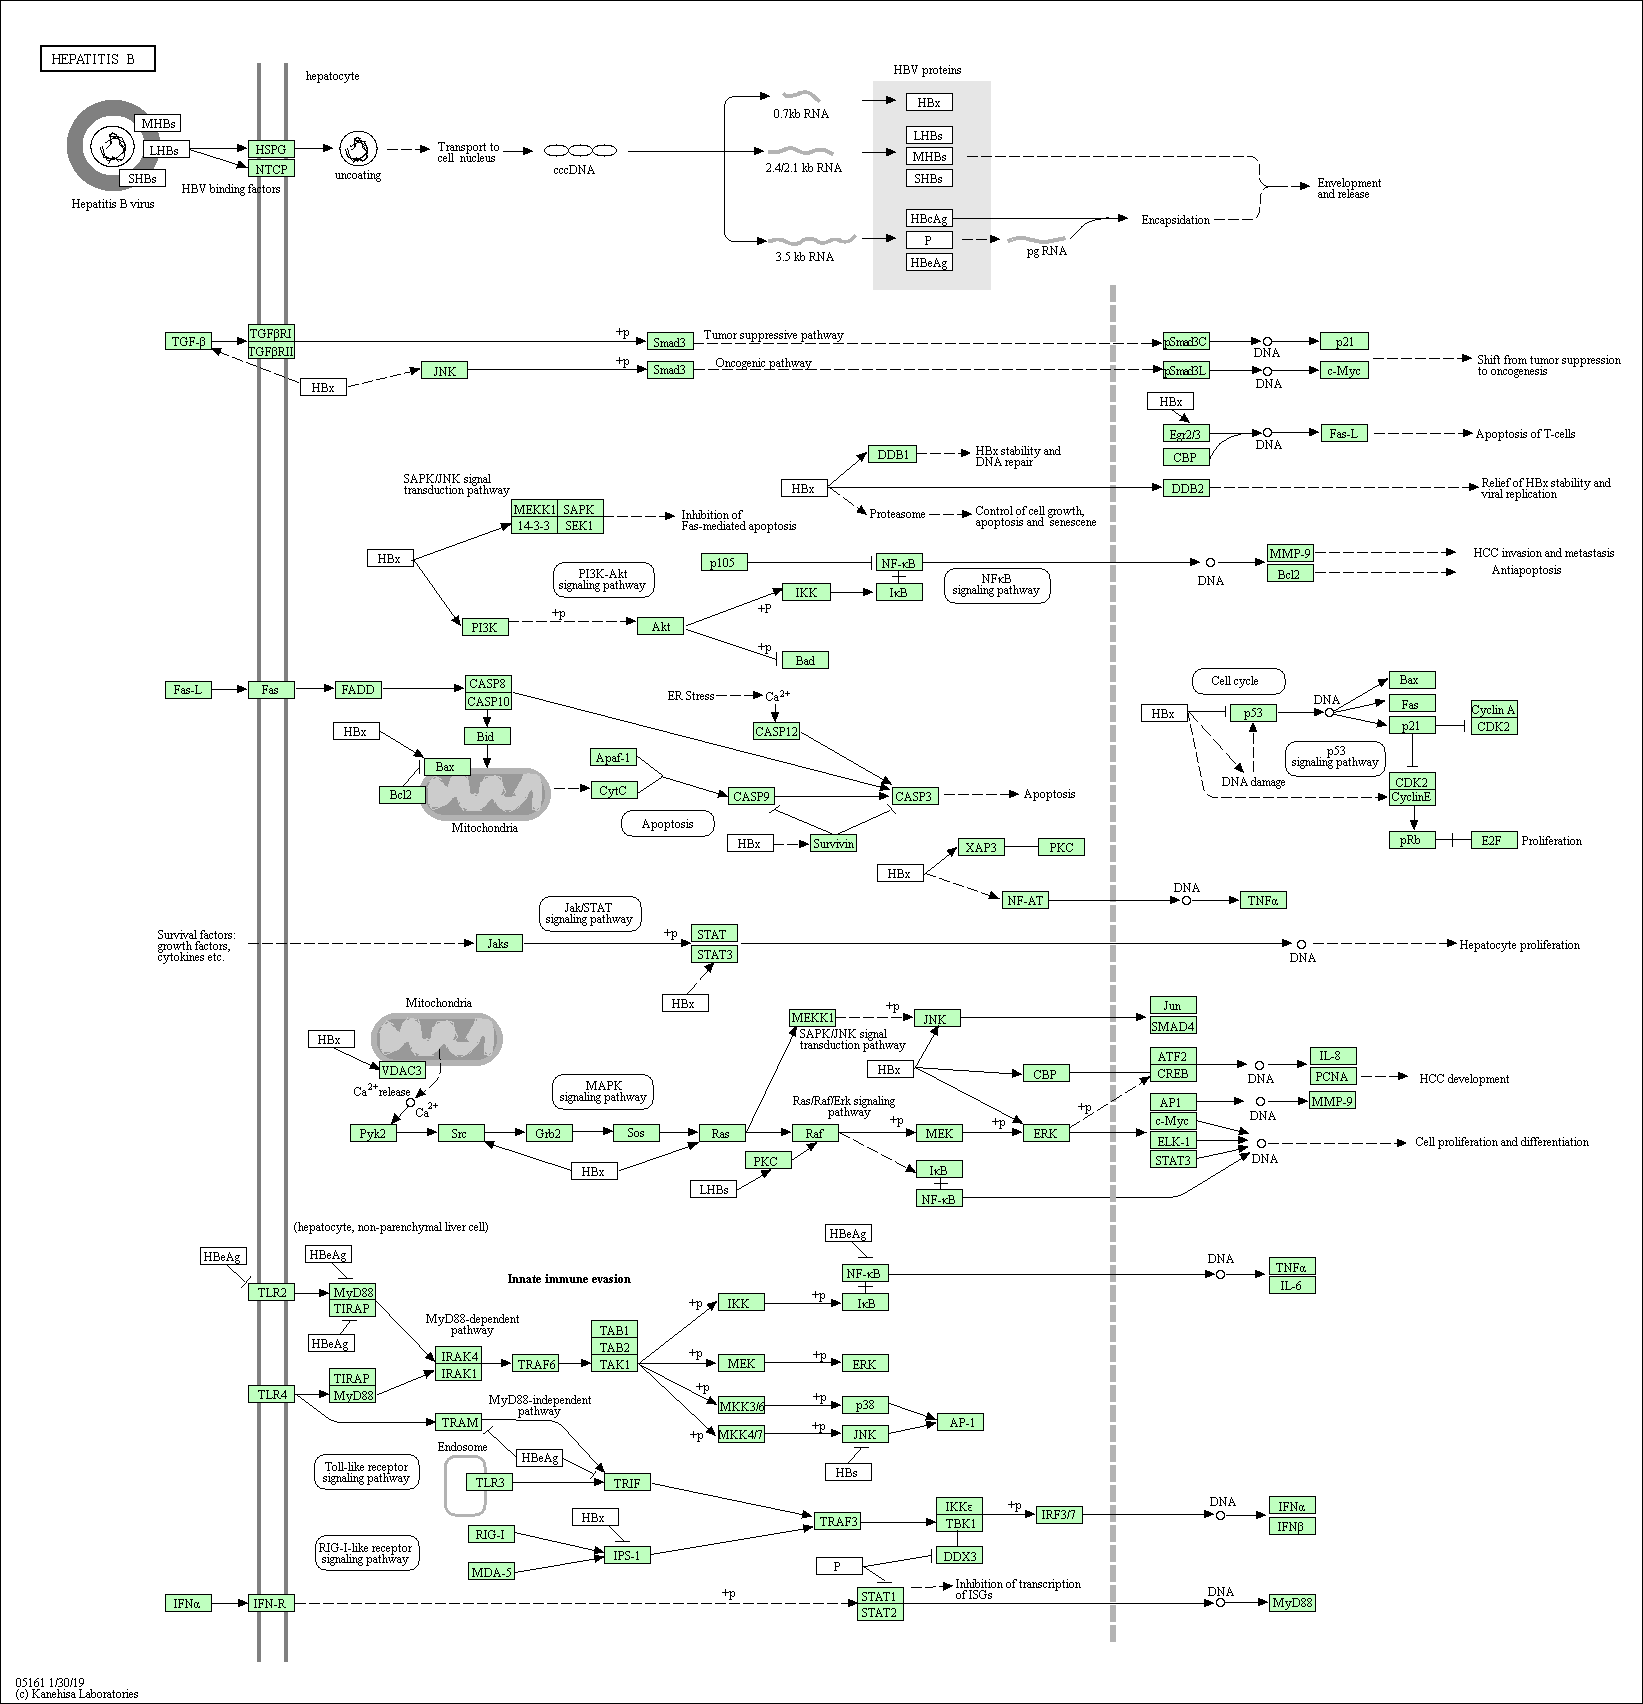 Virus pathway diagram